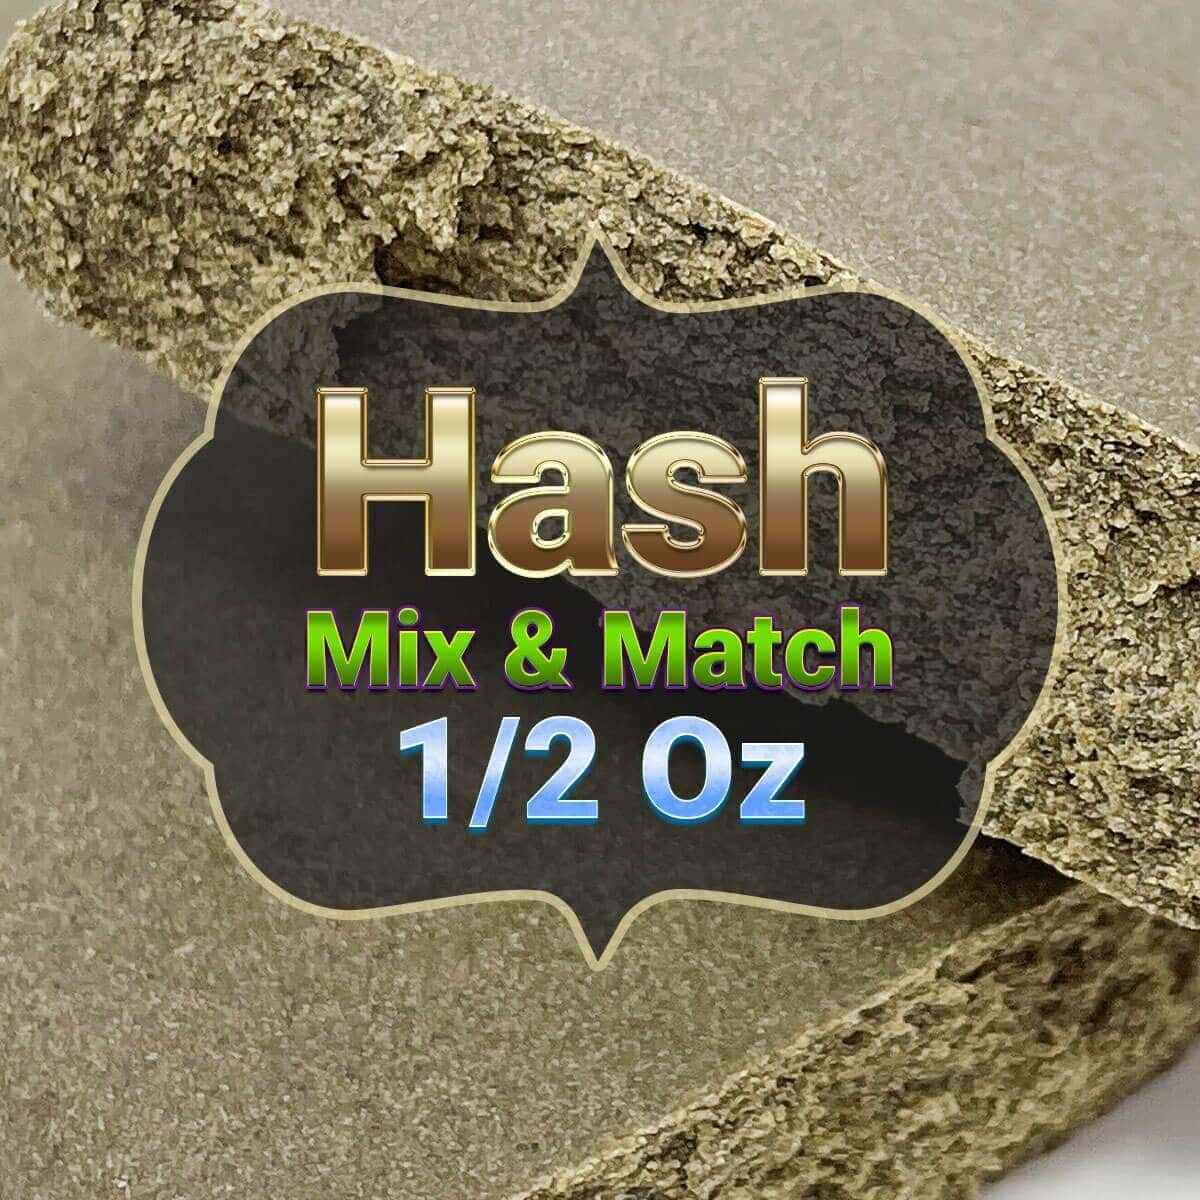 14 Gram Hash Mix & Match